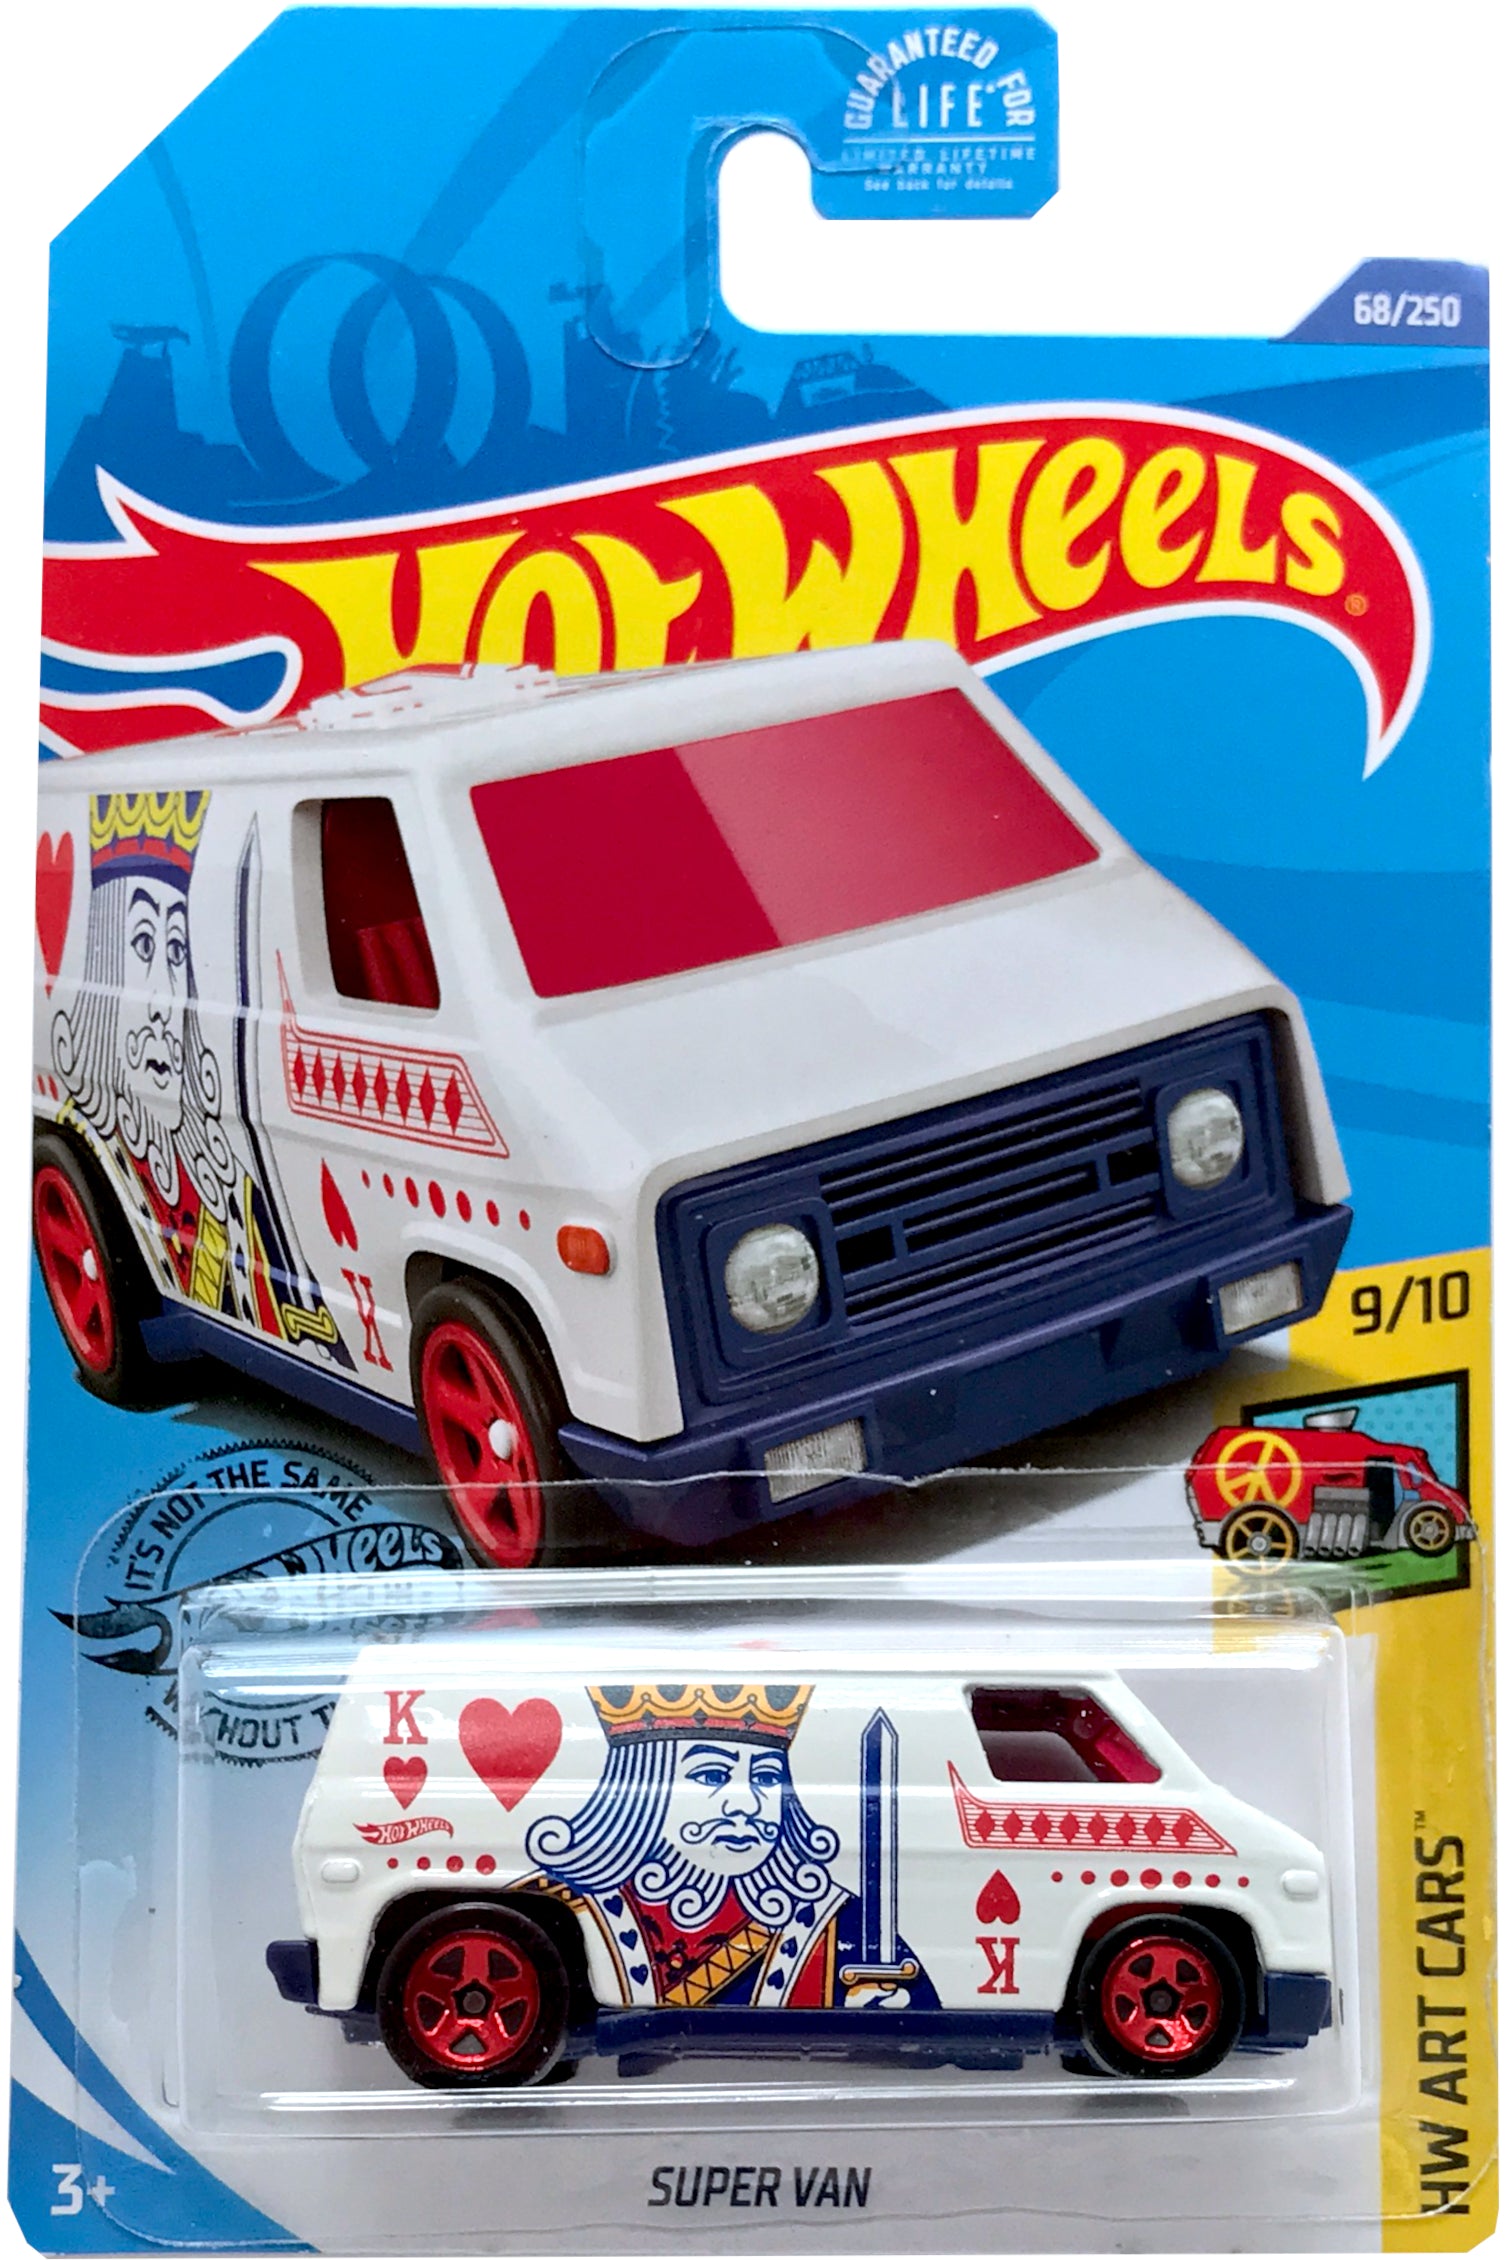 2020 Hot Wheels Mainline #068 - Super Van King of Hearts (White) GHC21